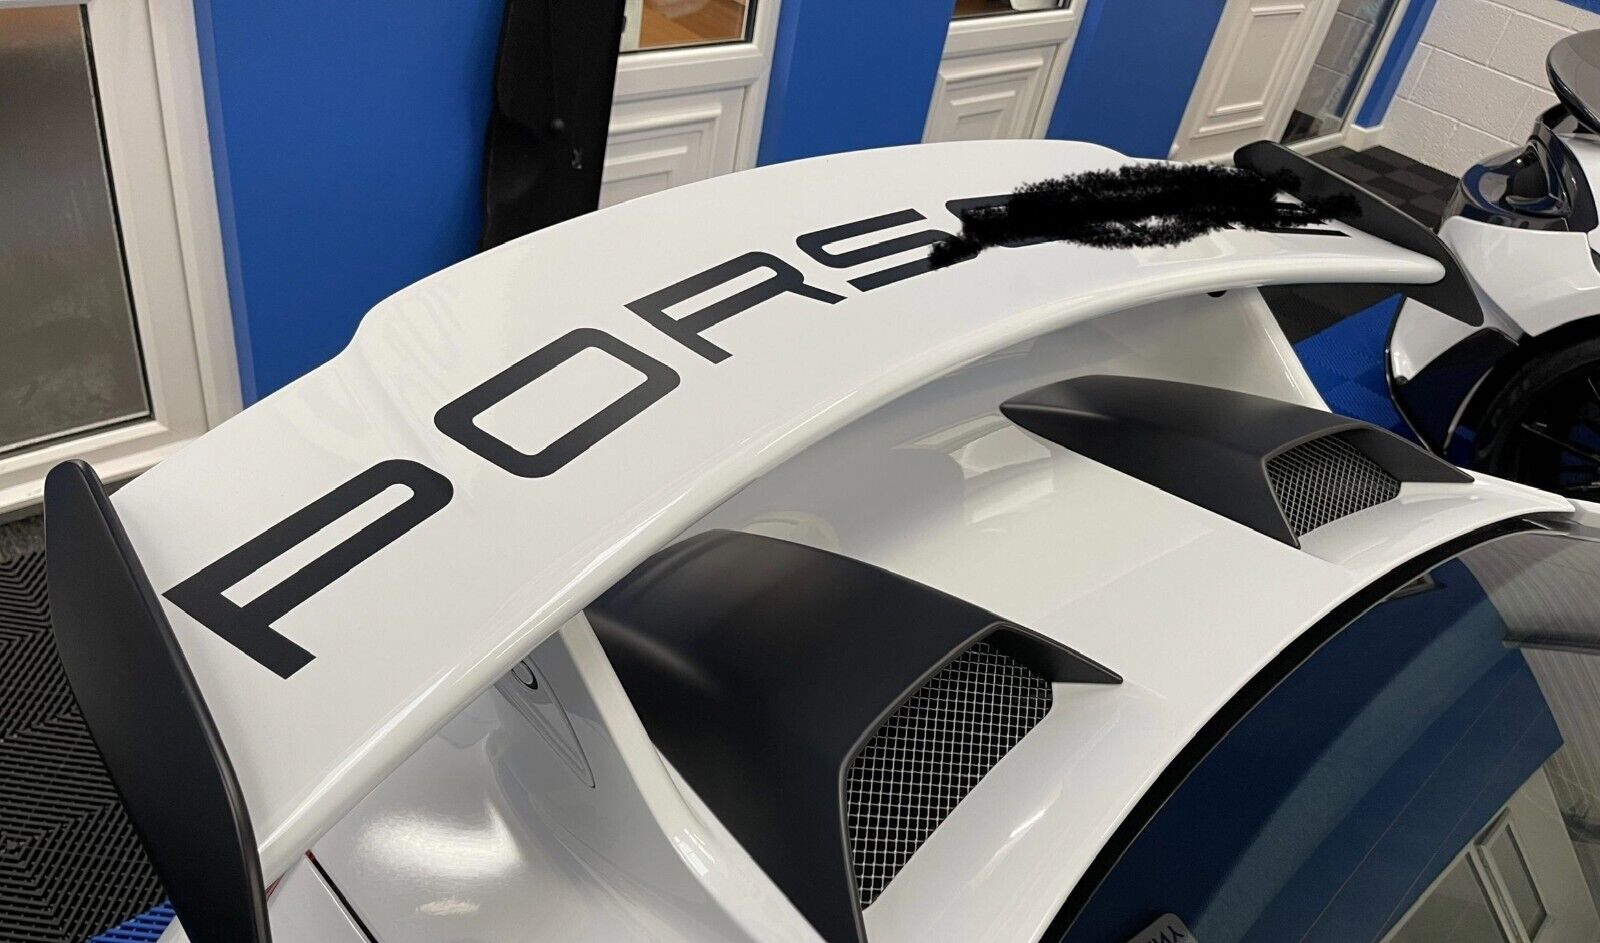 Custom GT3 Rear Wing Spoiler Decal for Porsche 911 2012-2019 991 991.2 GT3